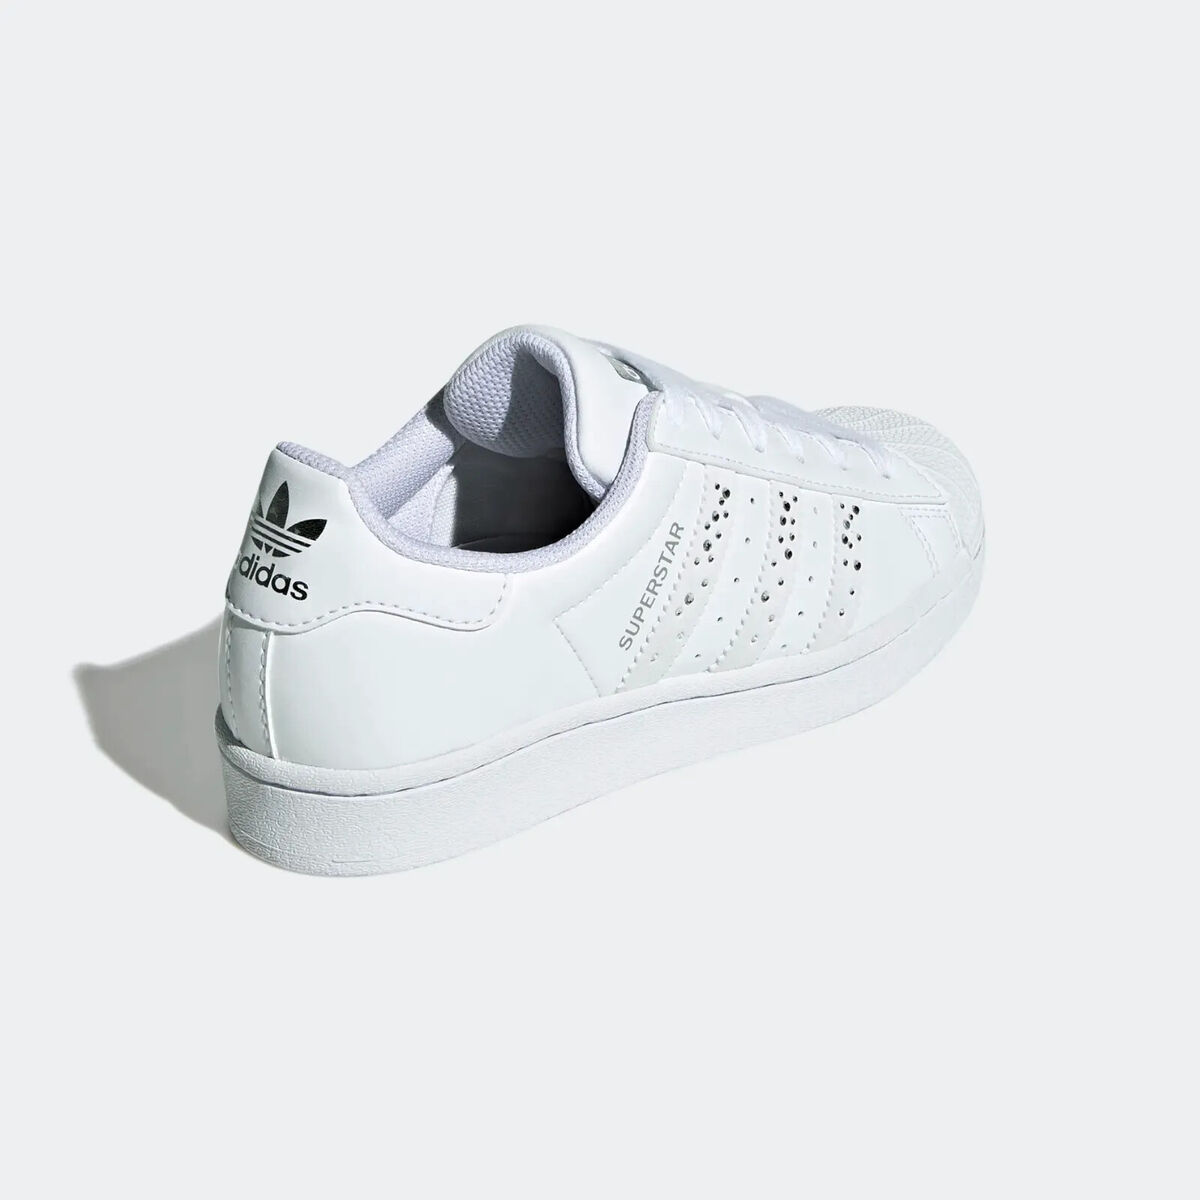 Adidas Superstar Junior H04019 White Sneaker Shoes BS338 | eBay